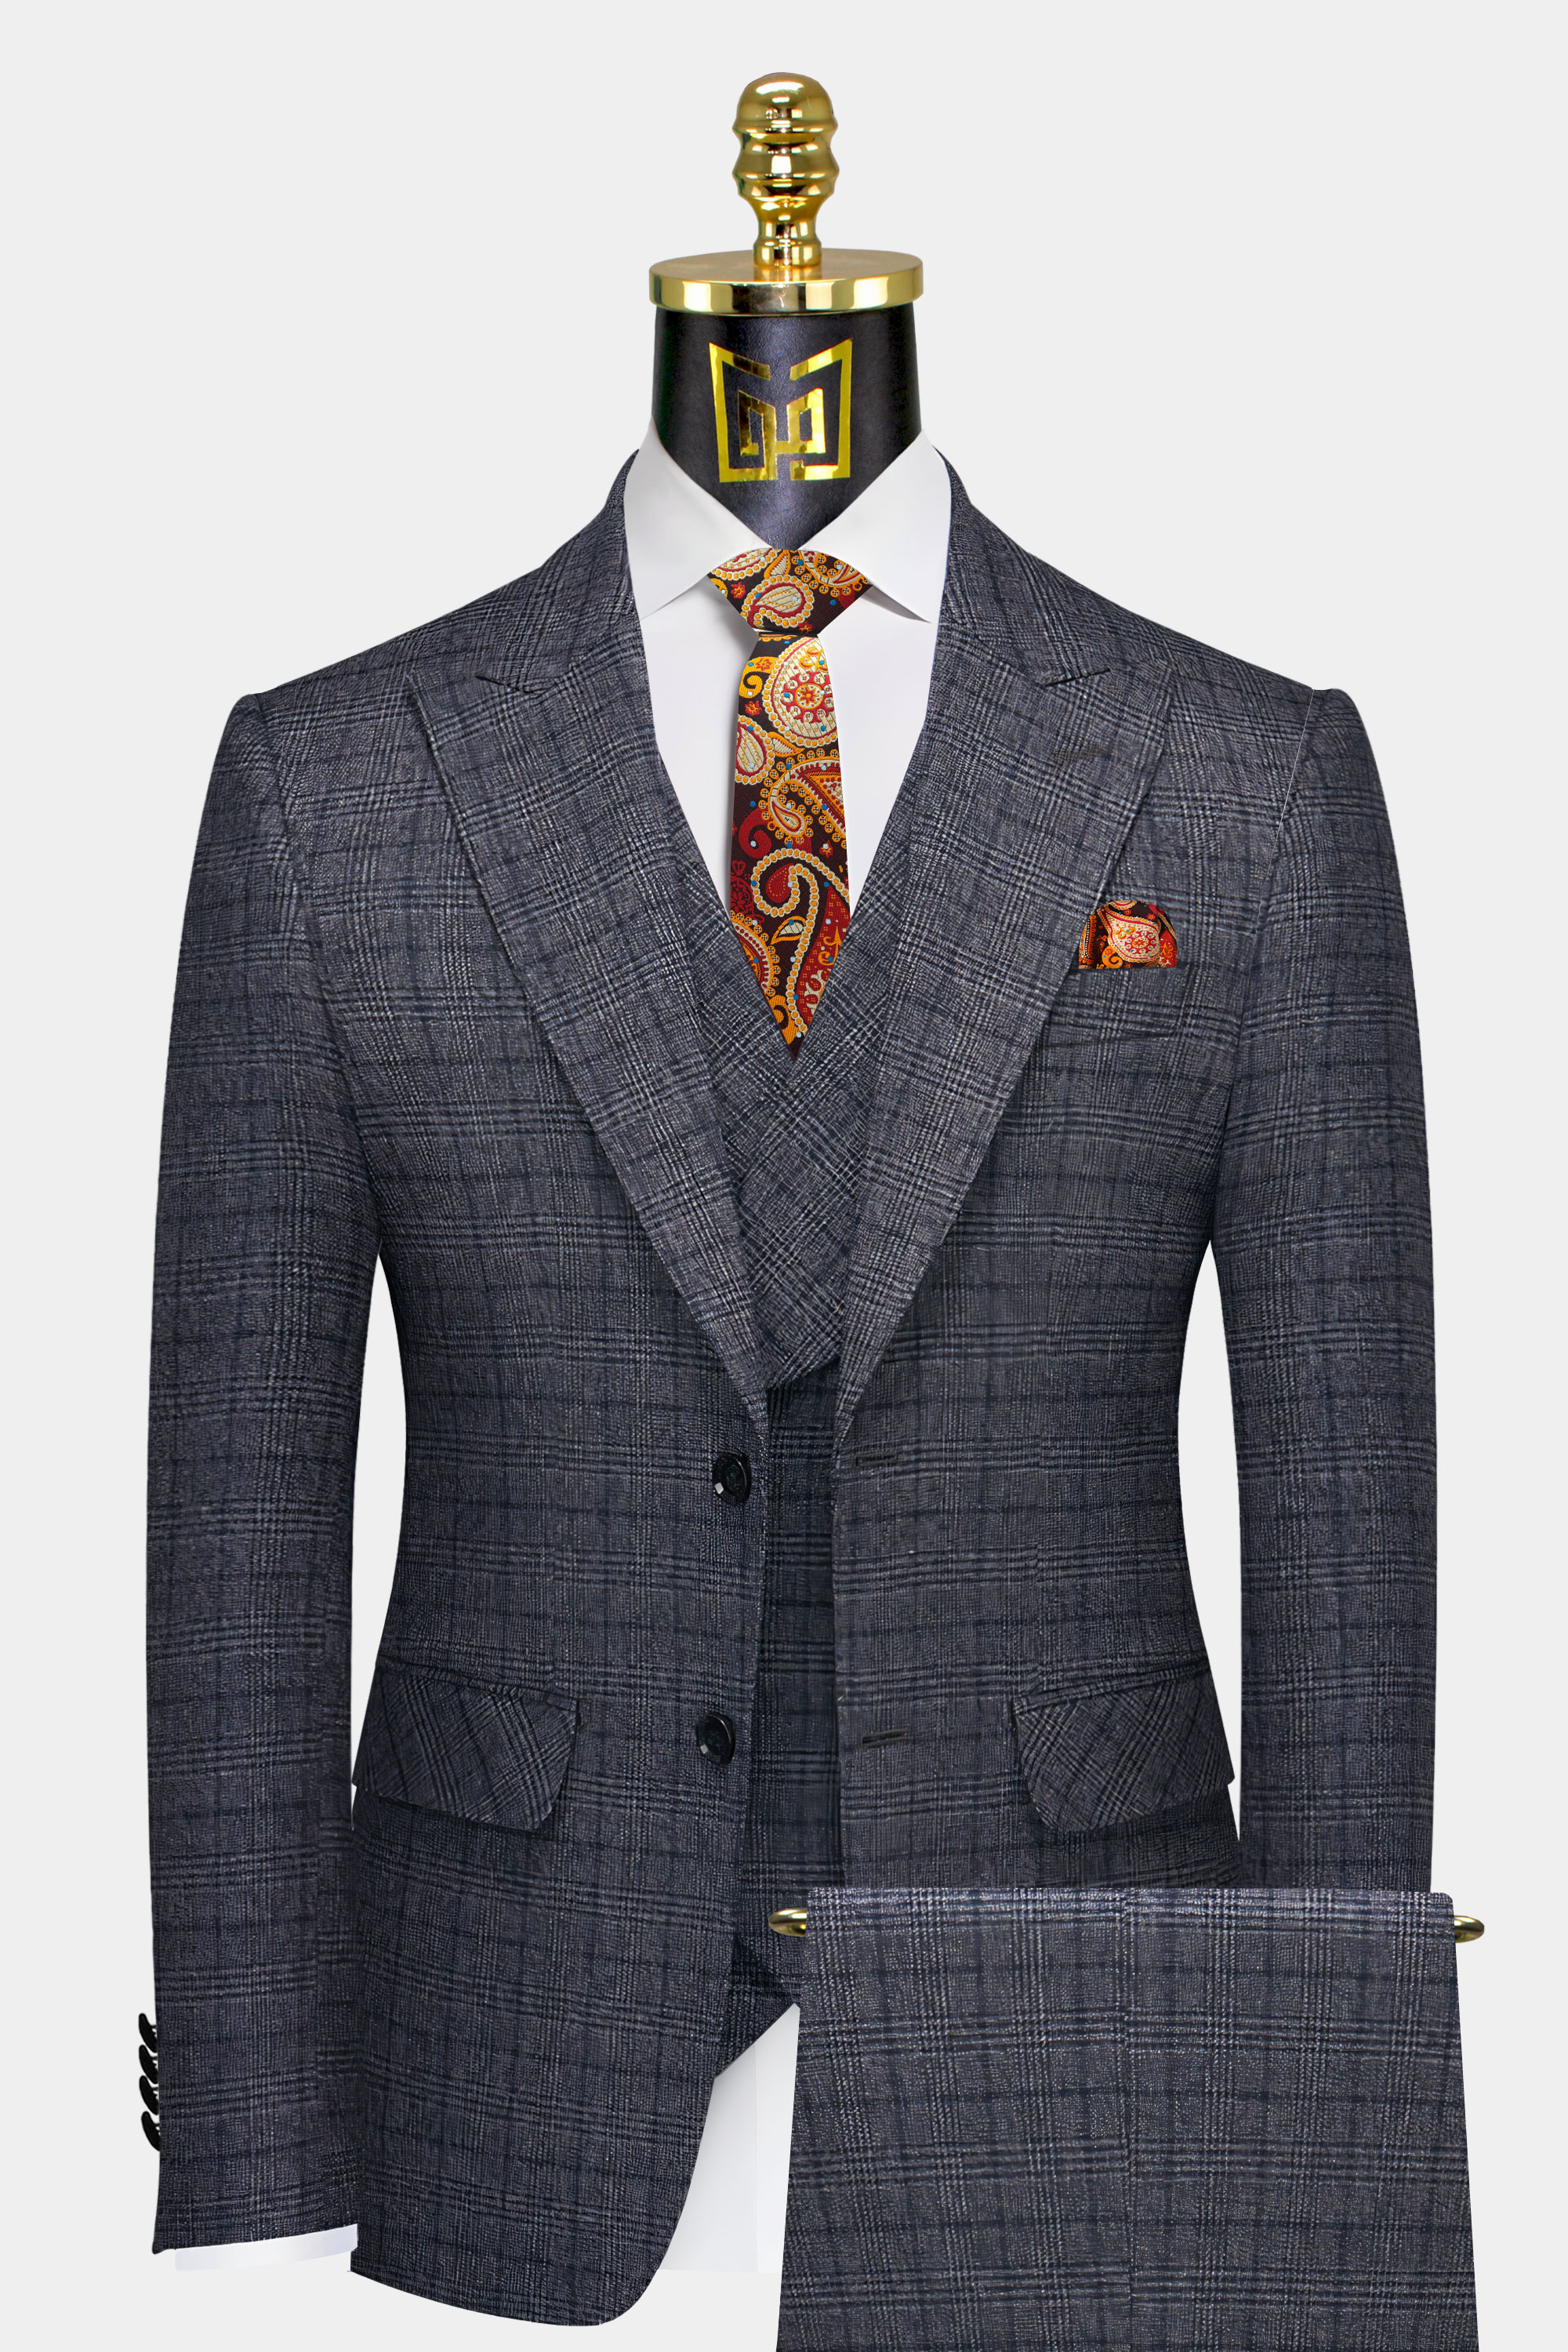 Mens-Dark-Grey-Plaid-Suit-Groom-Wedding-Attire-from-Gentlemansguru.com